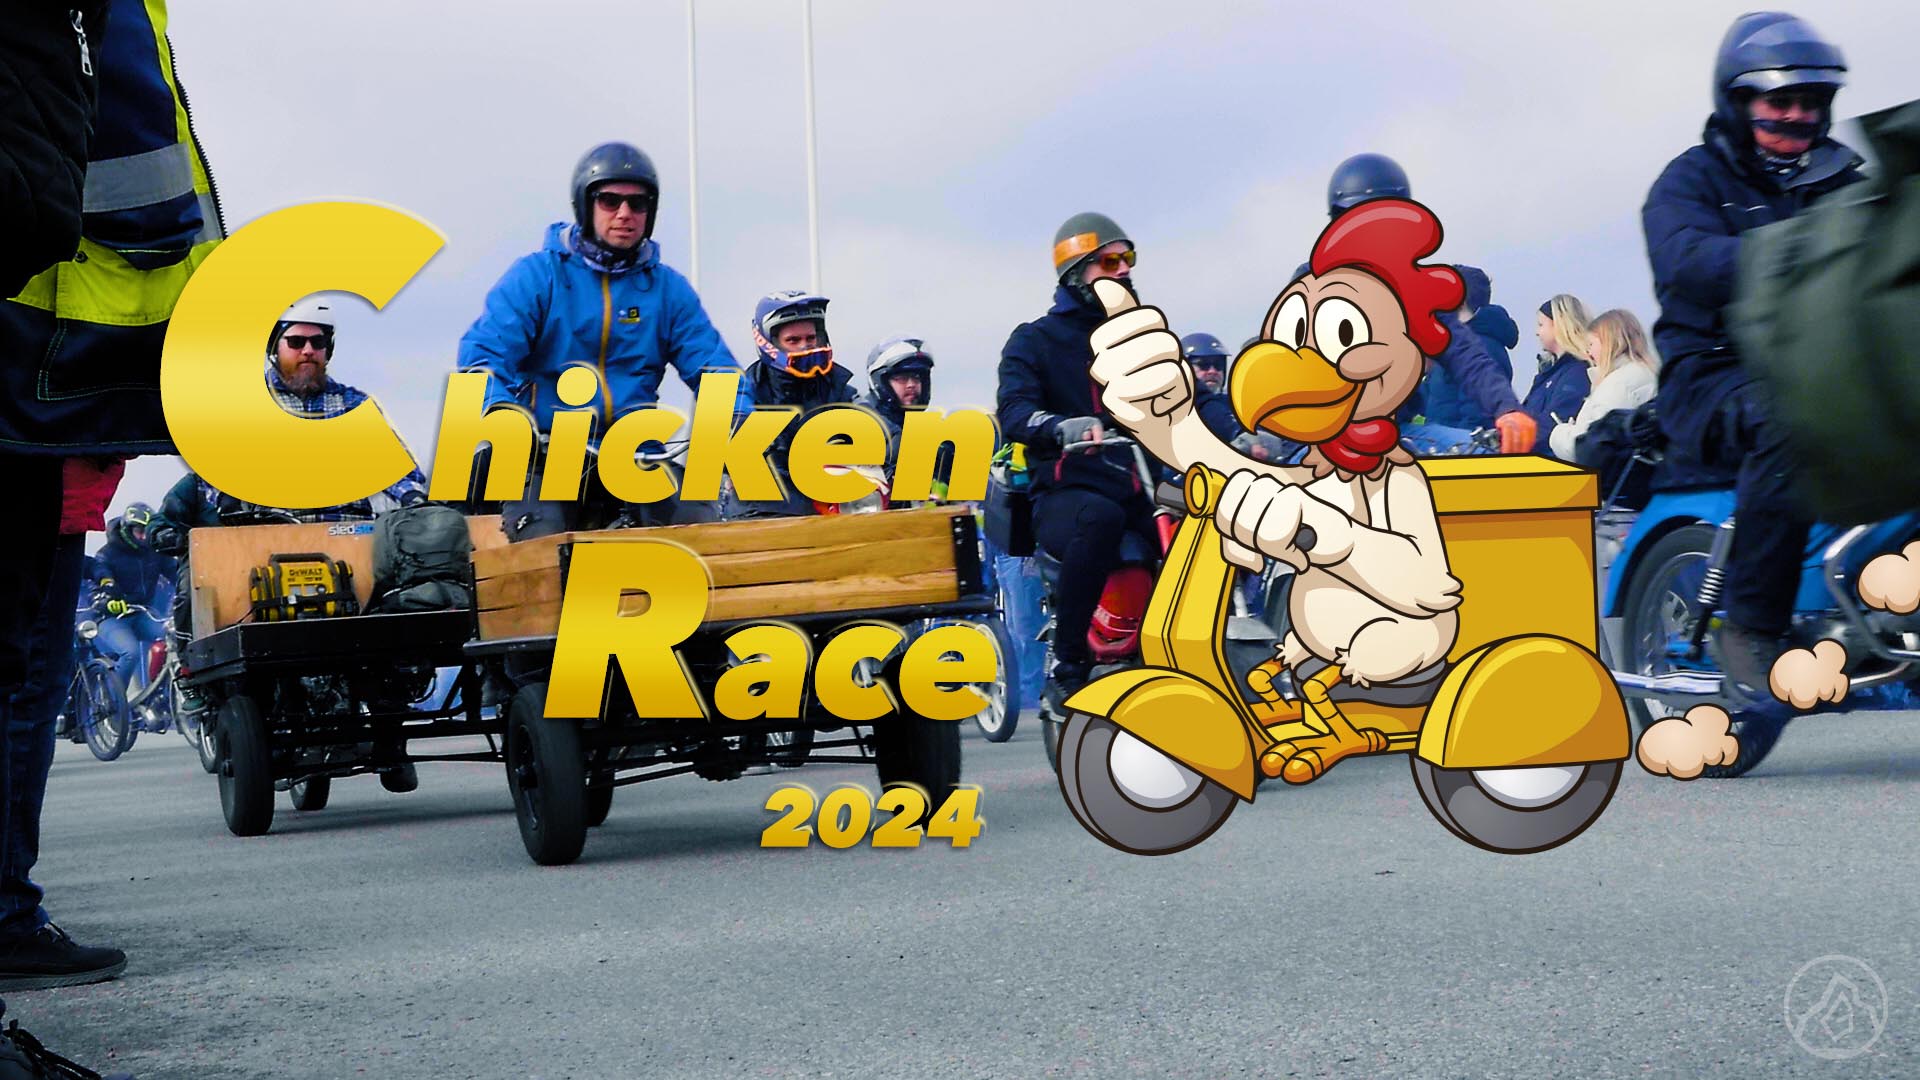 Chicken Race 2024